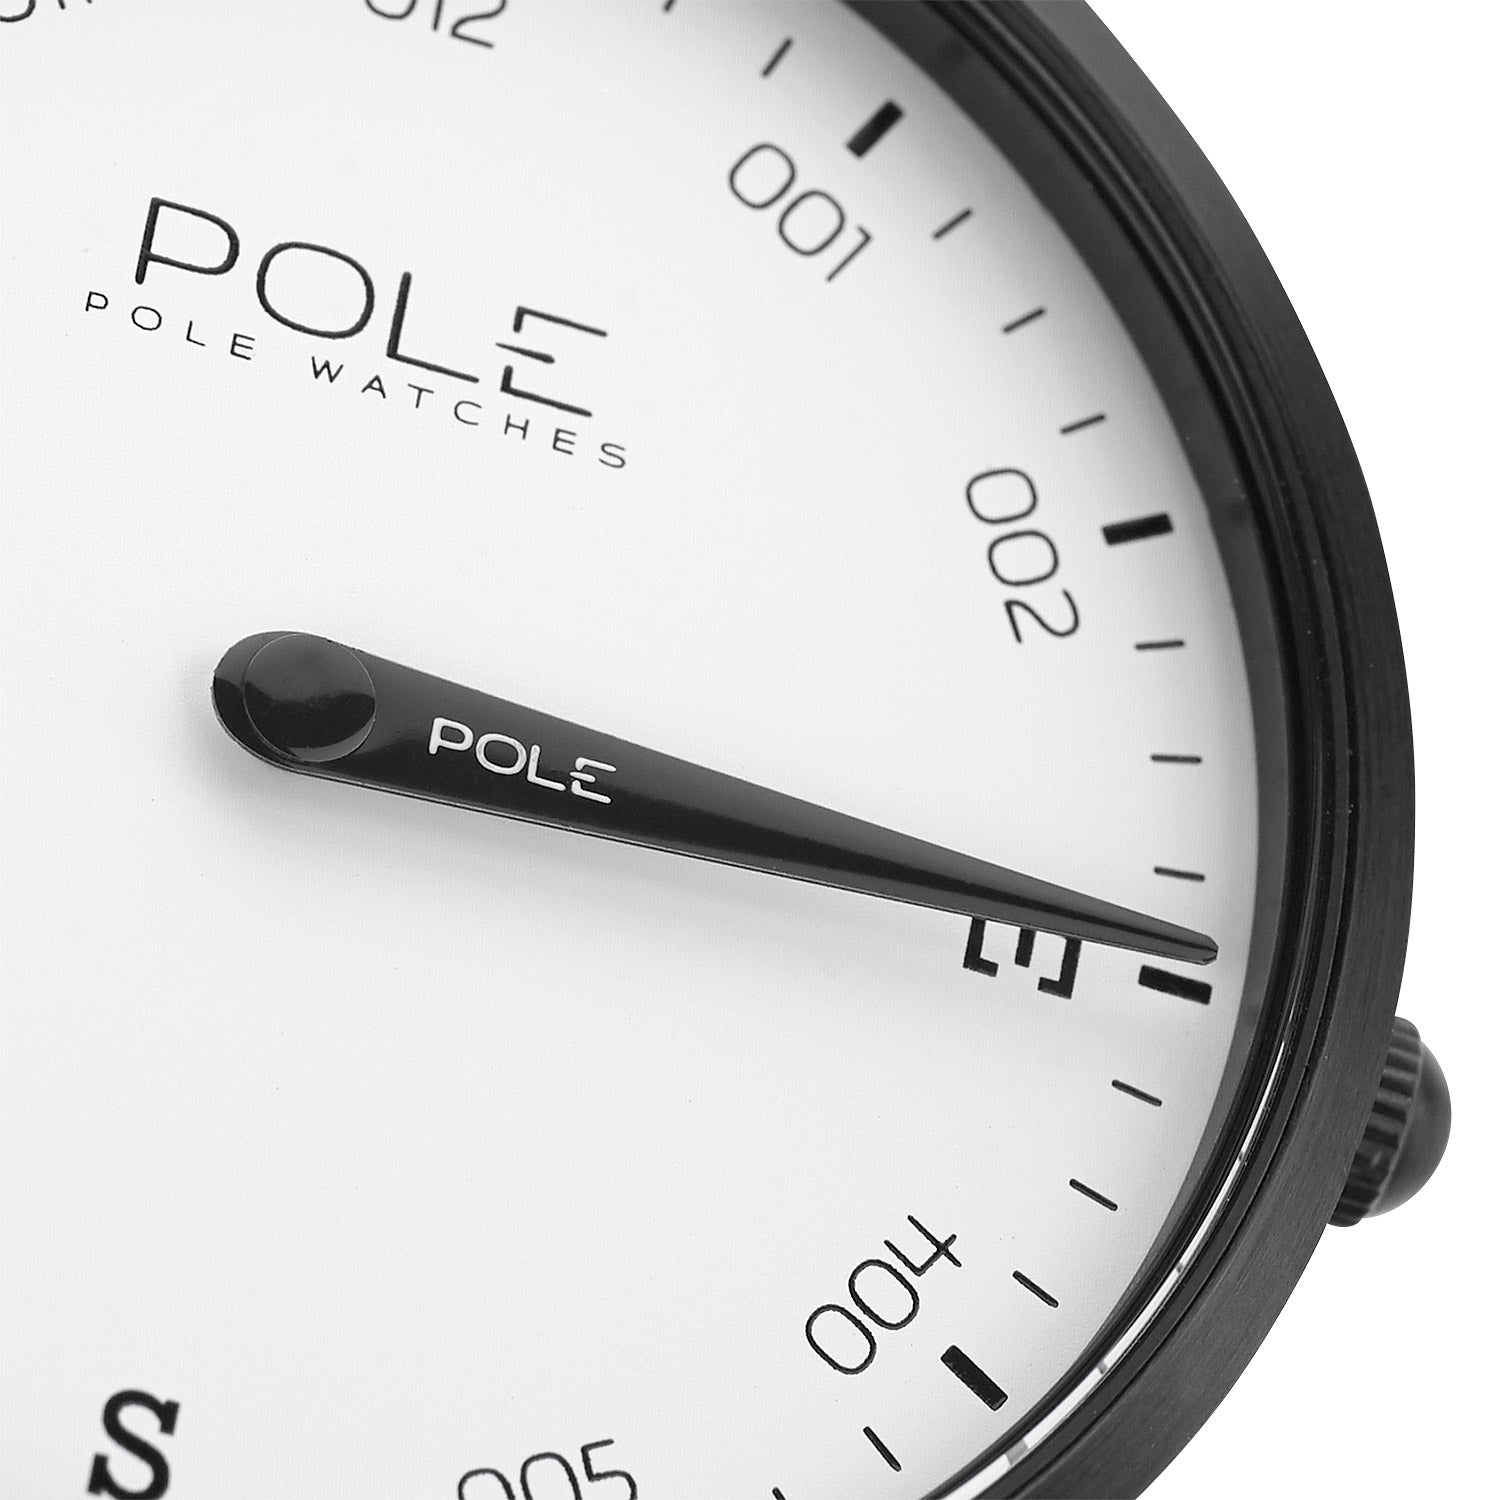 Reloj de una sola aguja - Modelo SNOWY - Reloj Monoaguja - Pole Watches